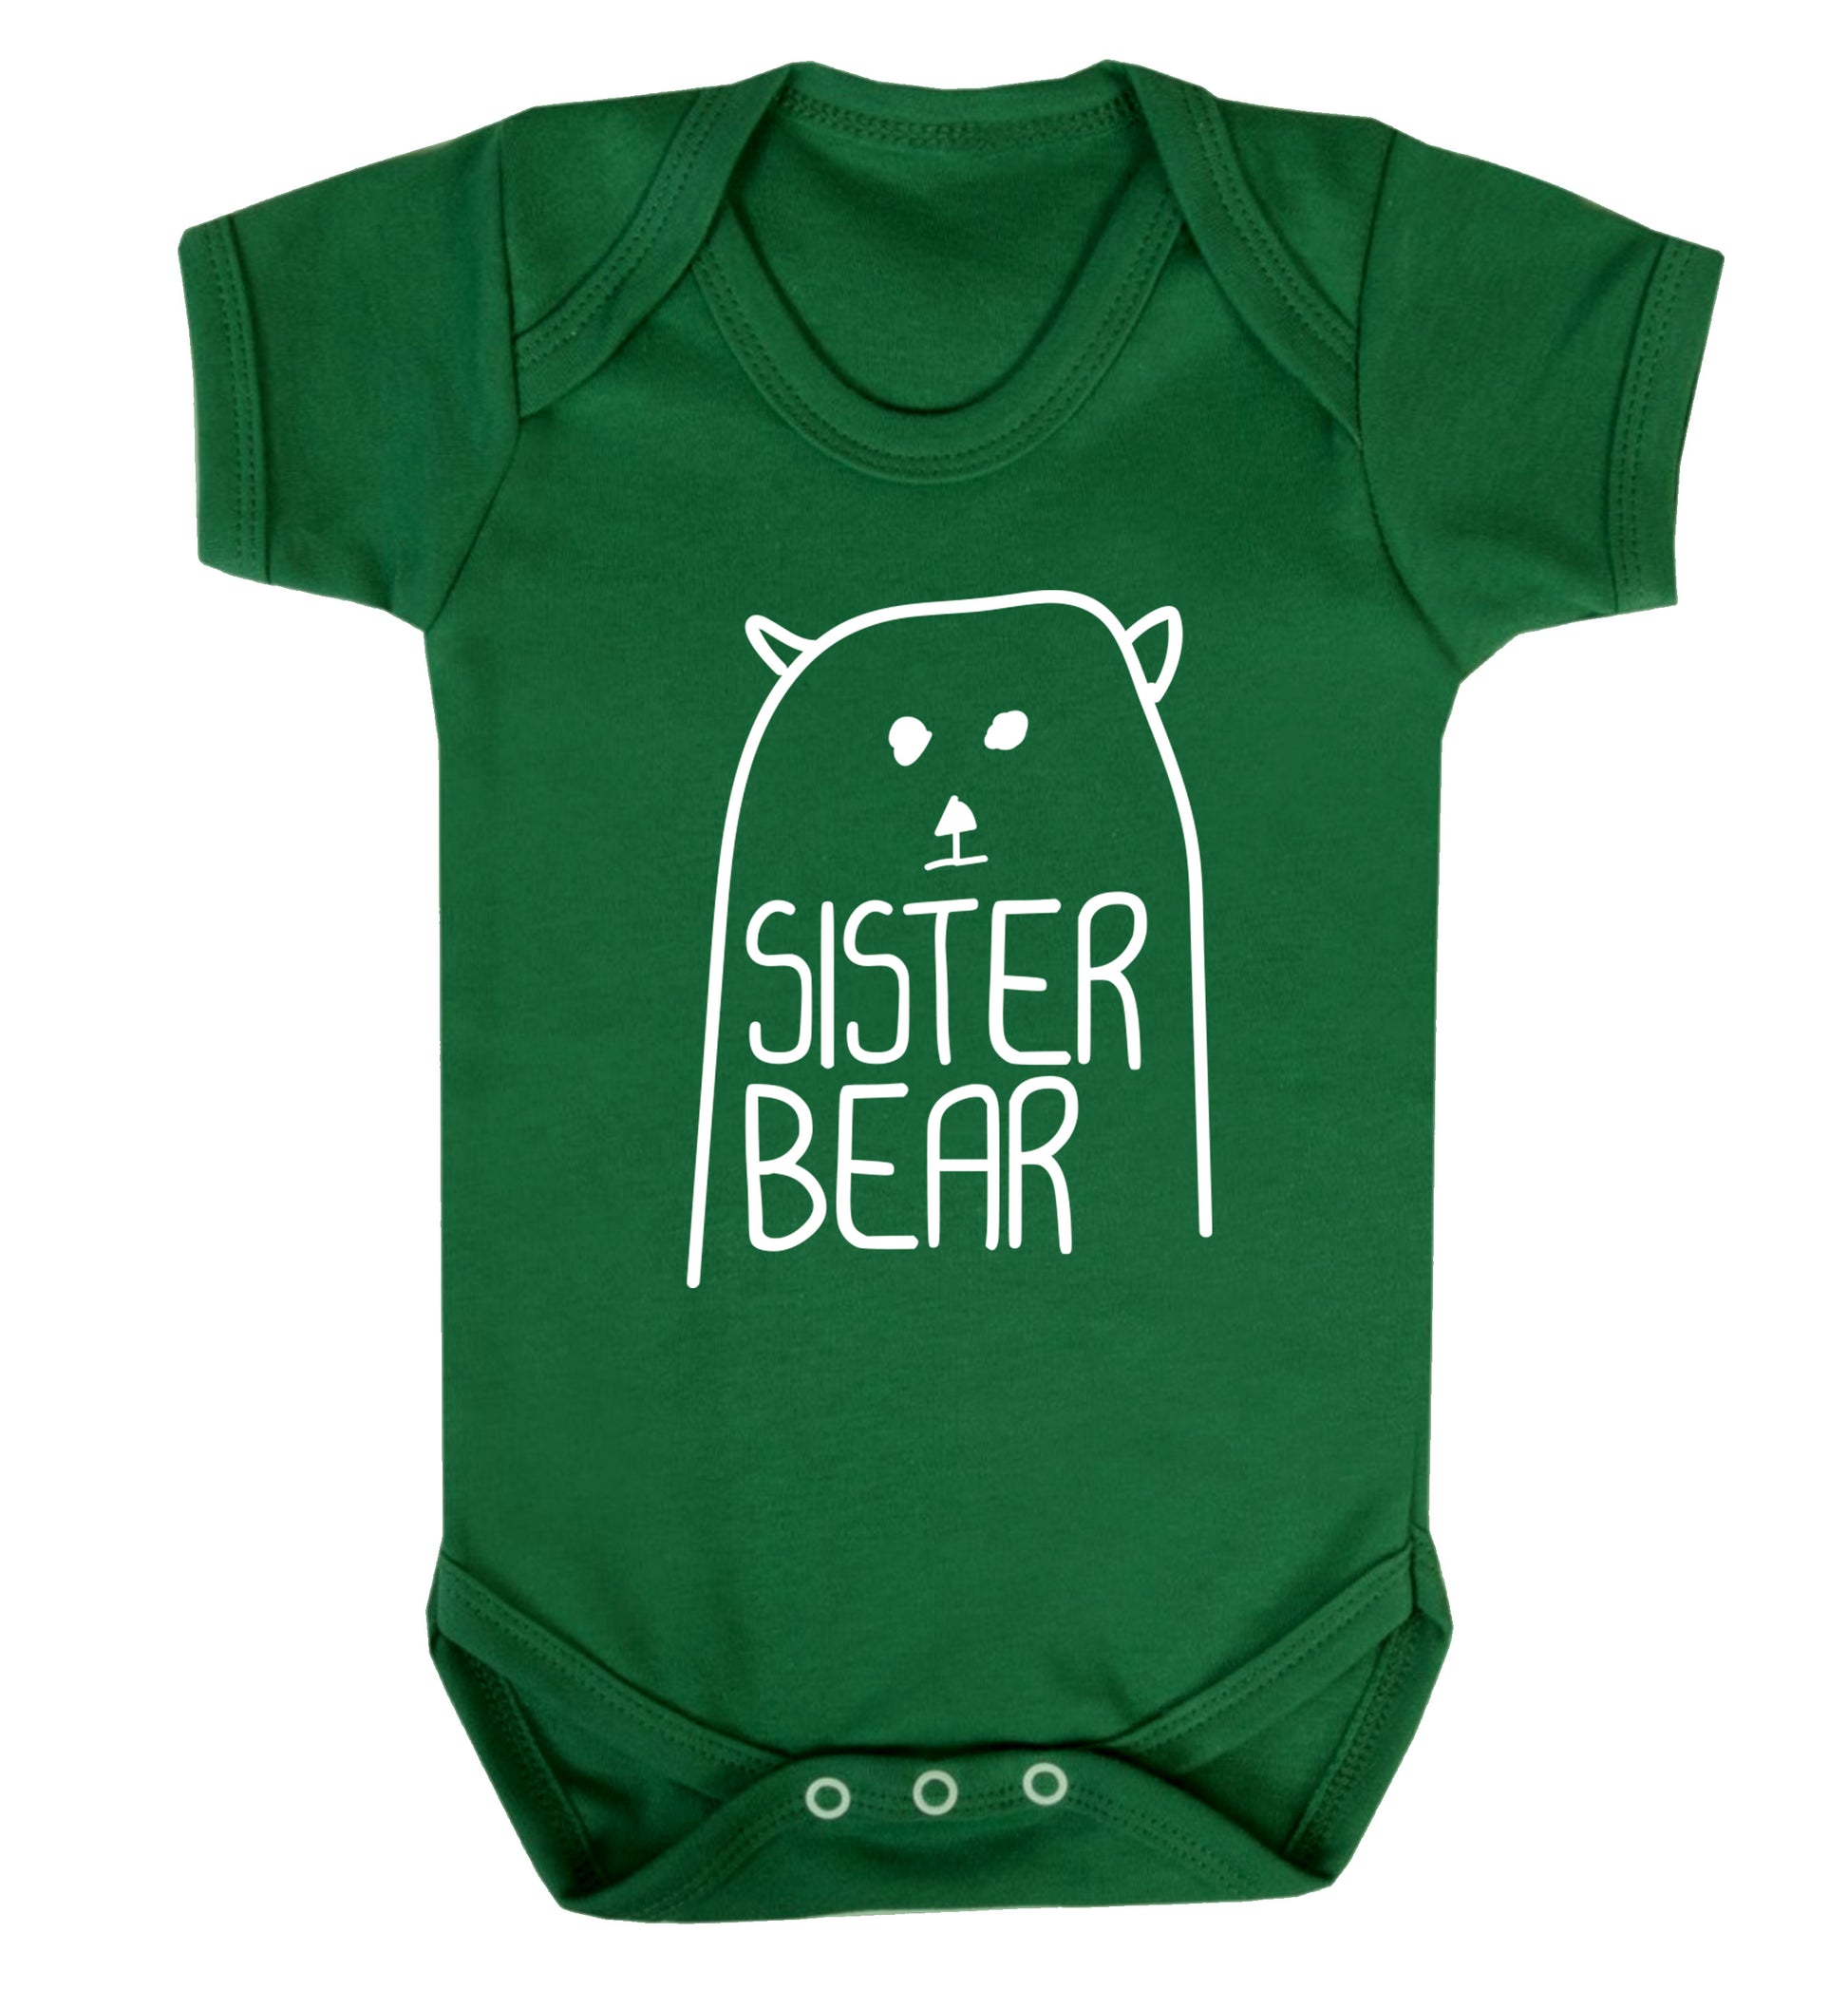 Sister bear Baby Vest green 18-24 months